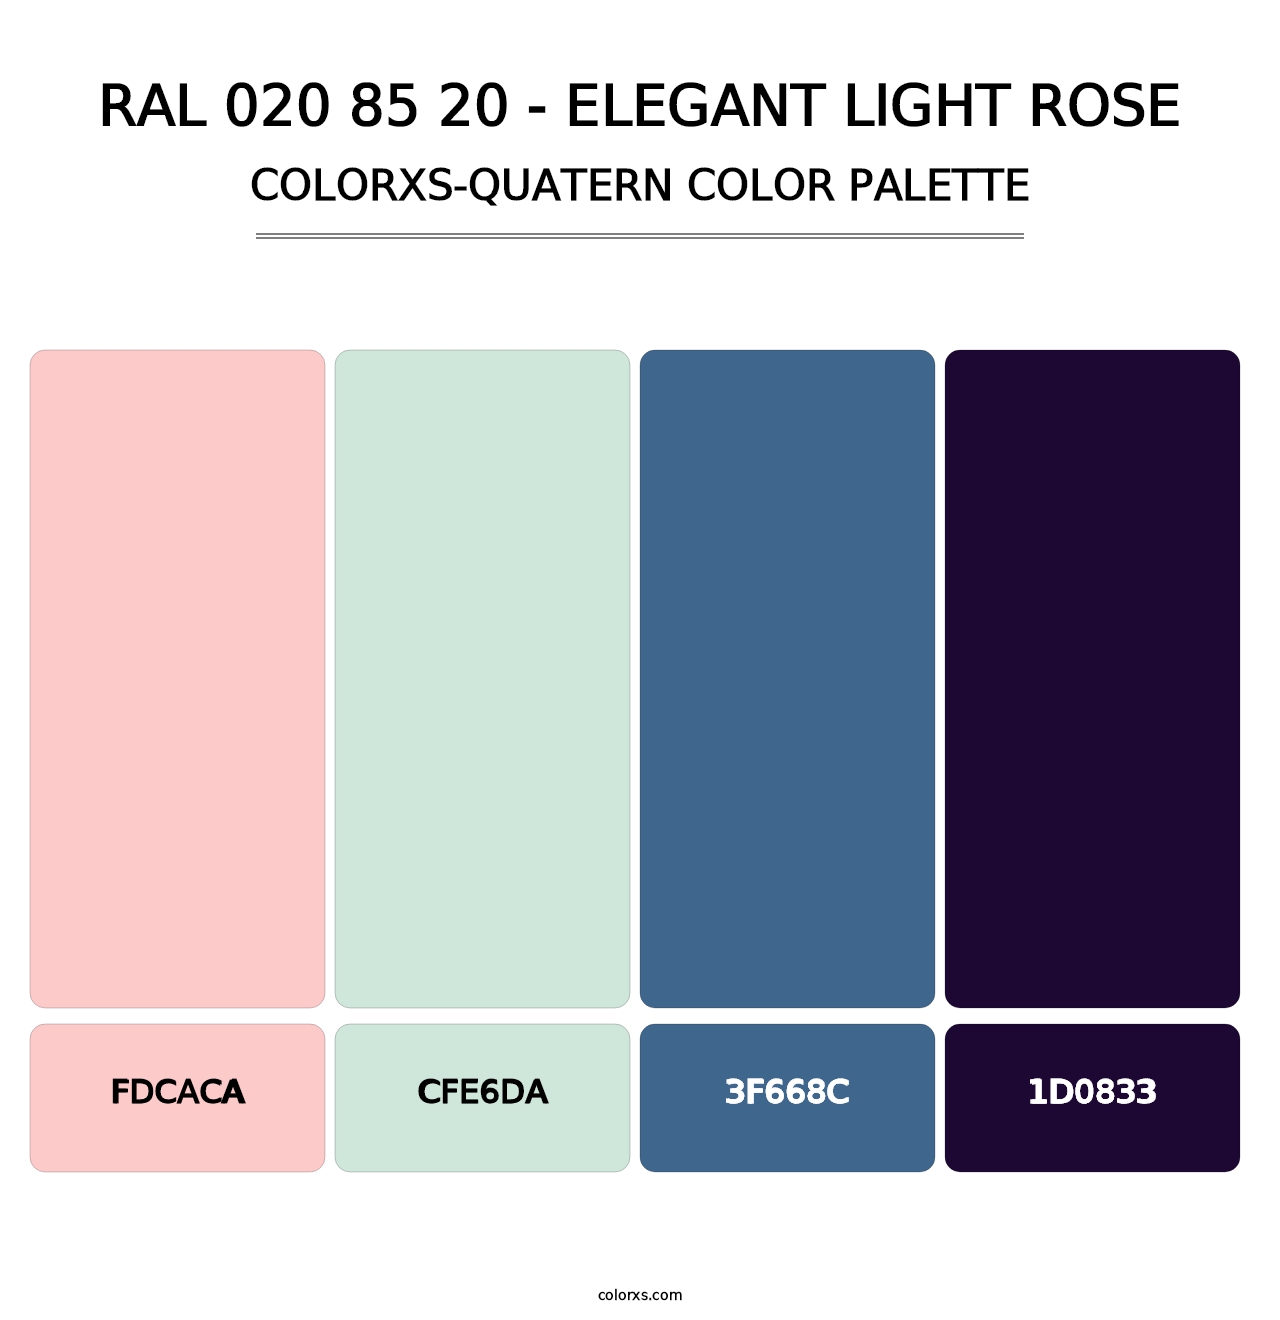 RAL 020 85 20 - Elegant Light Rose - Colorxs Quatern Palette